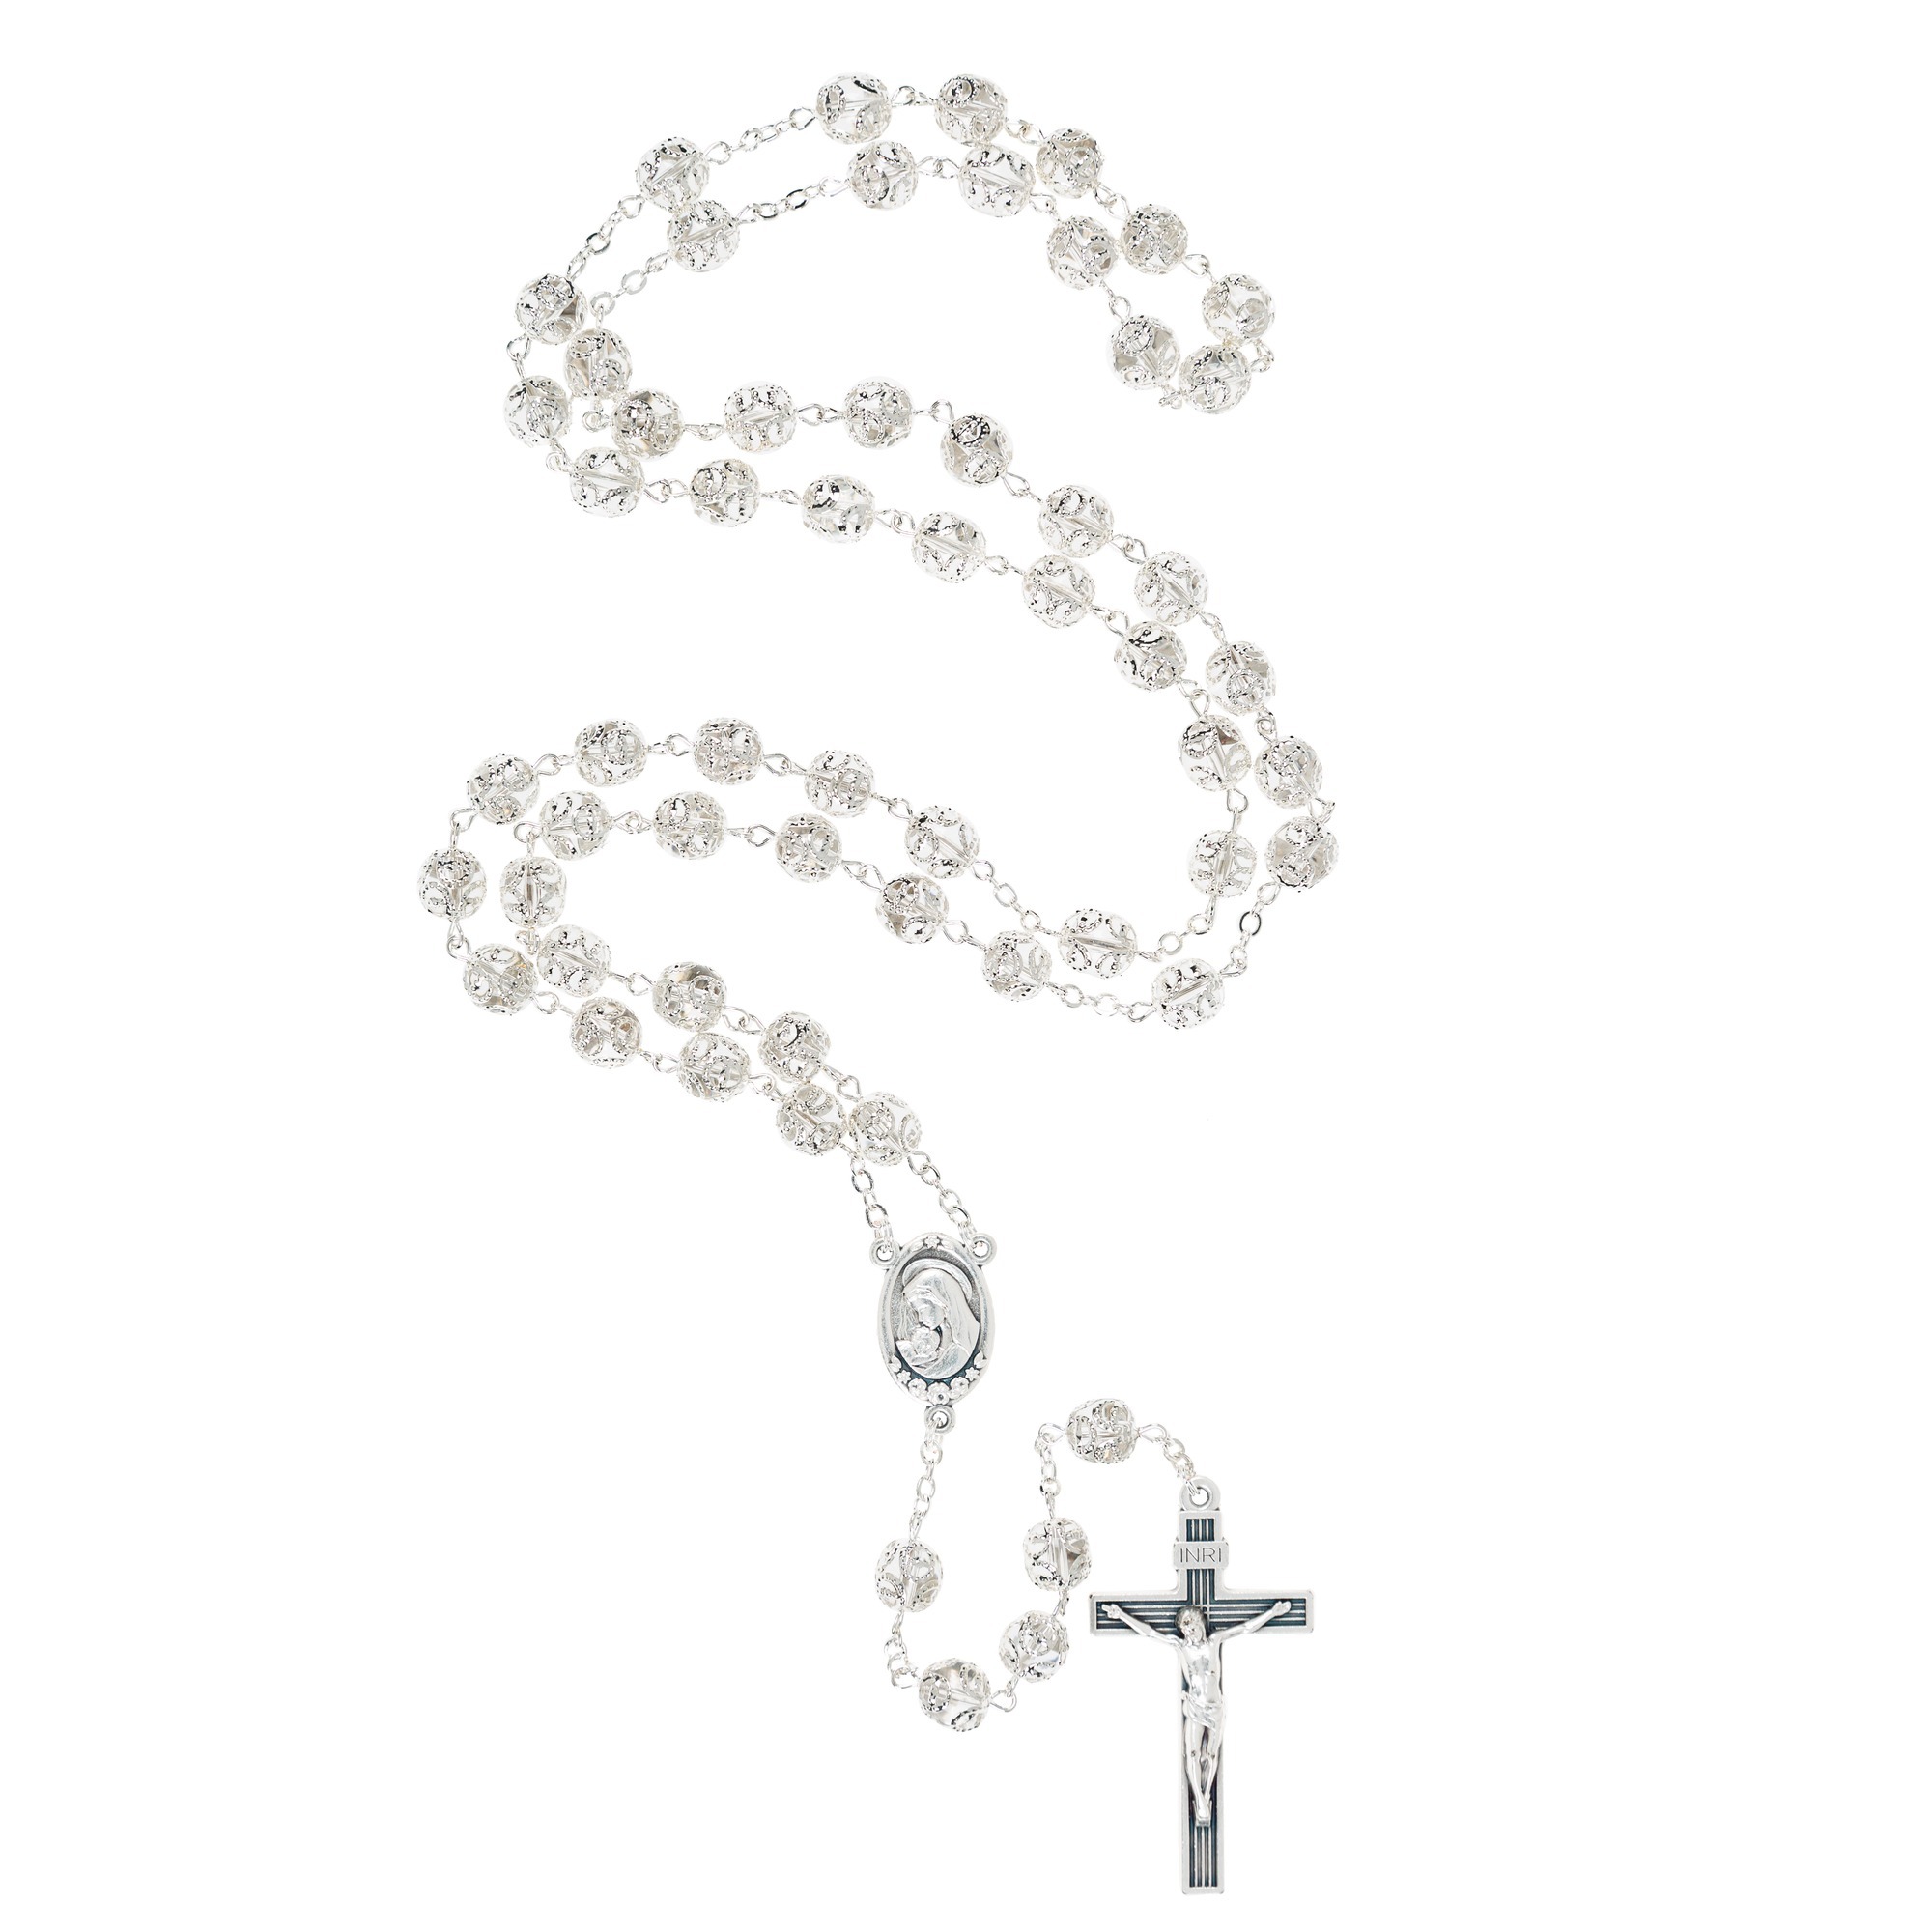 Glass Sacred Heart Rosary | The Catholic Company®